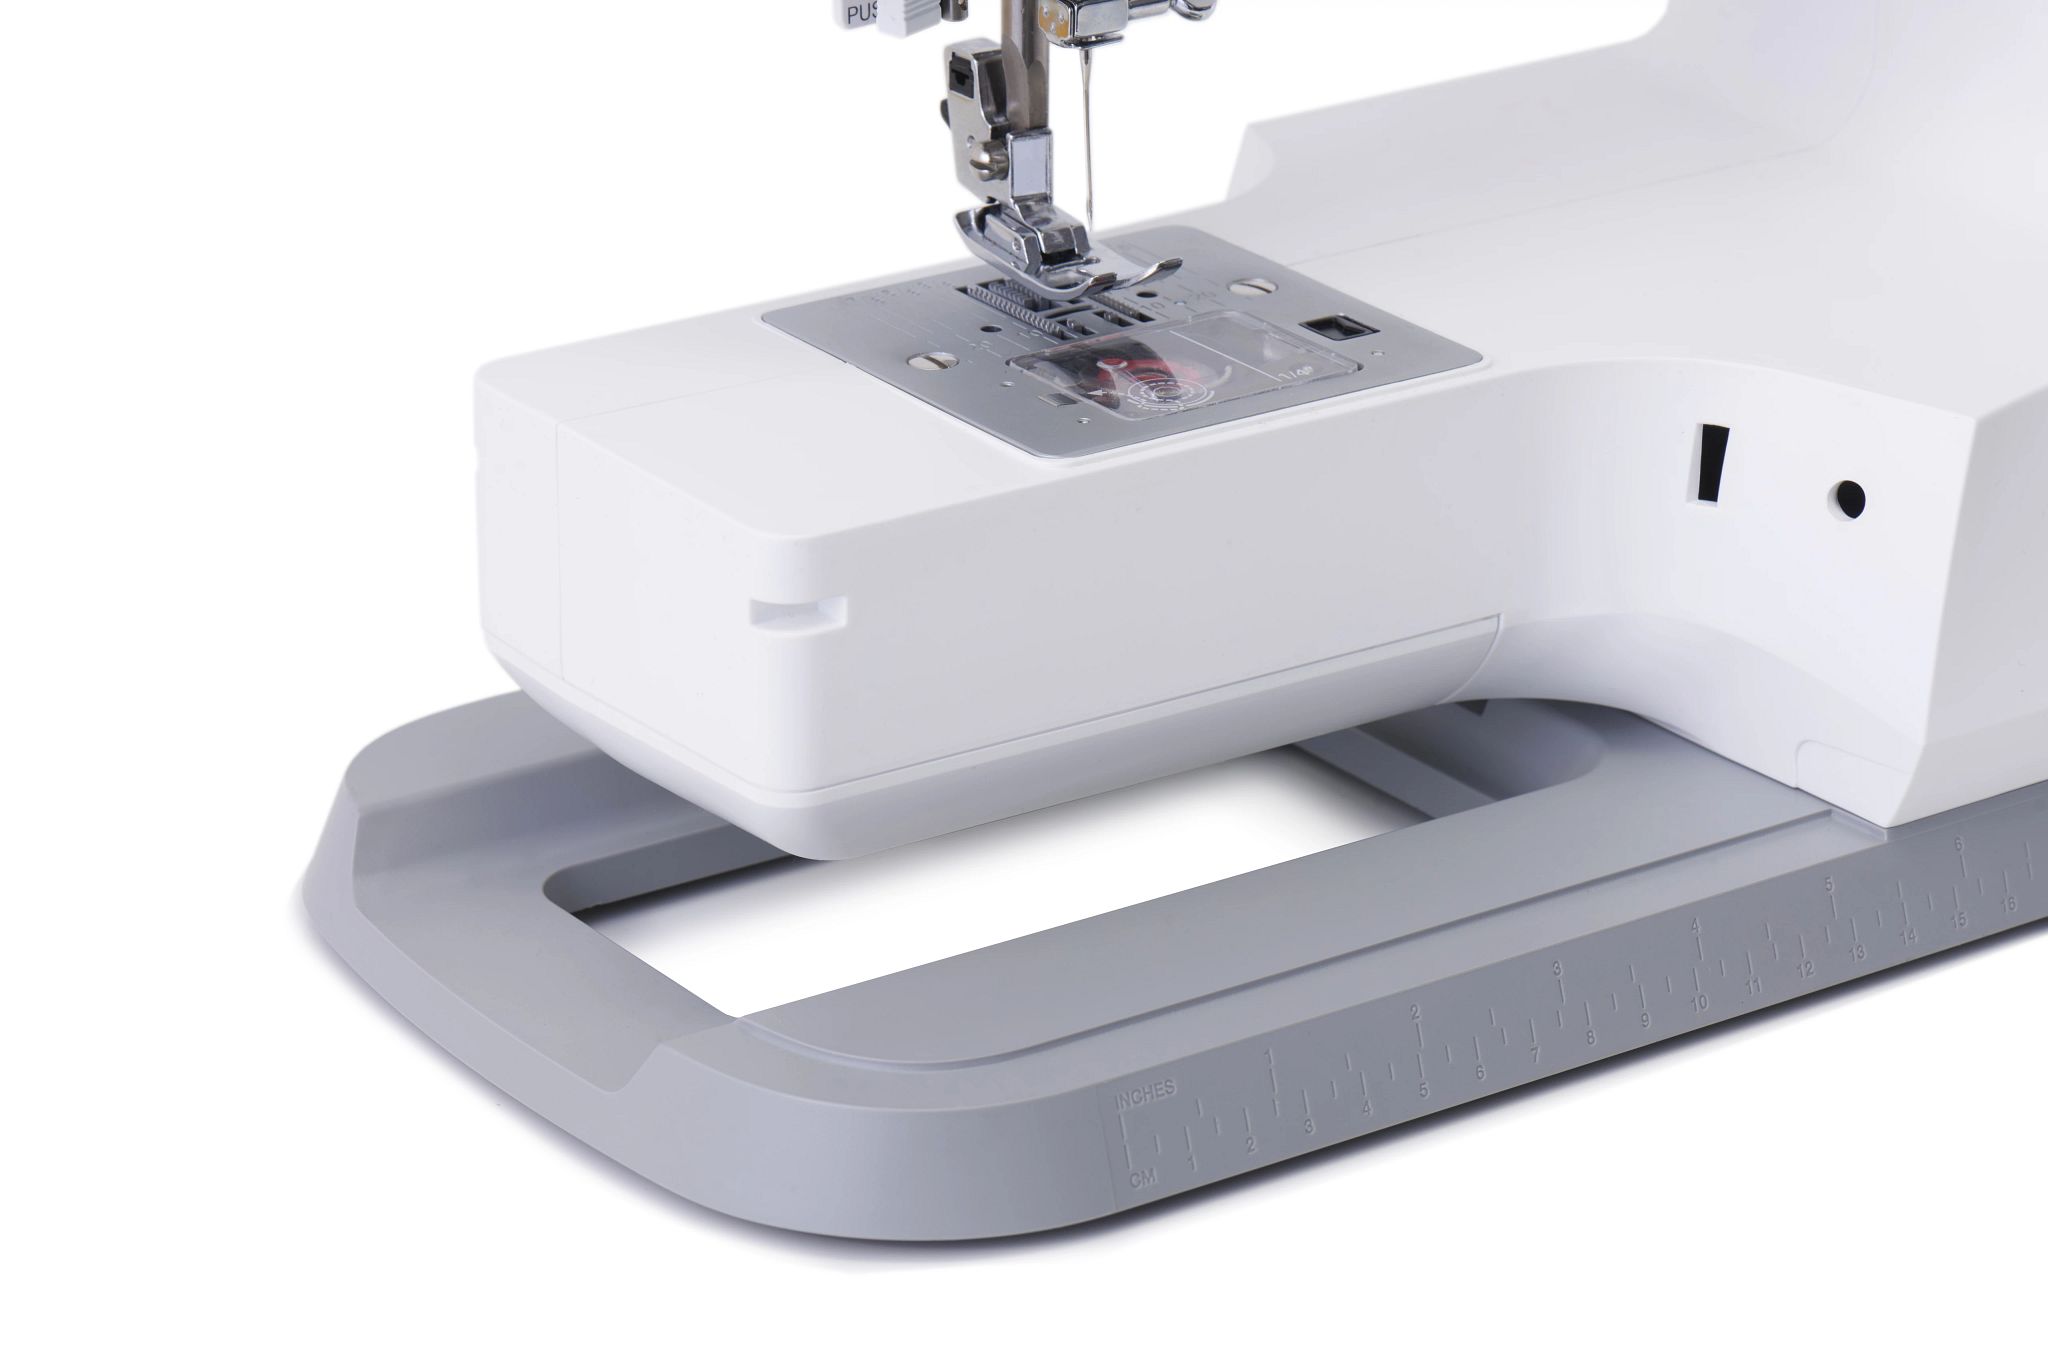 ME457 Elite Sewing Machine